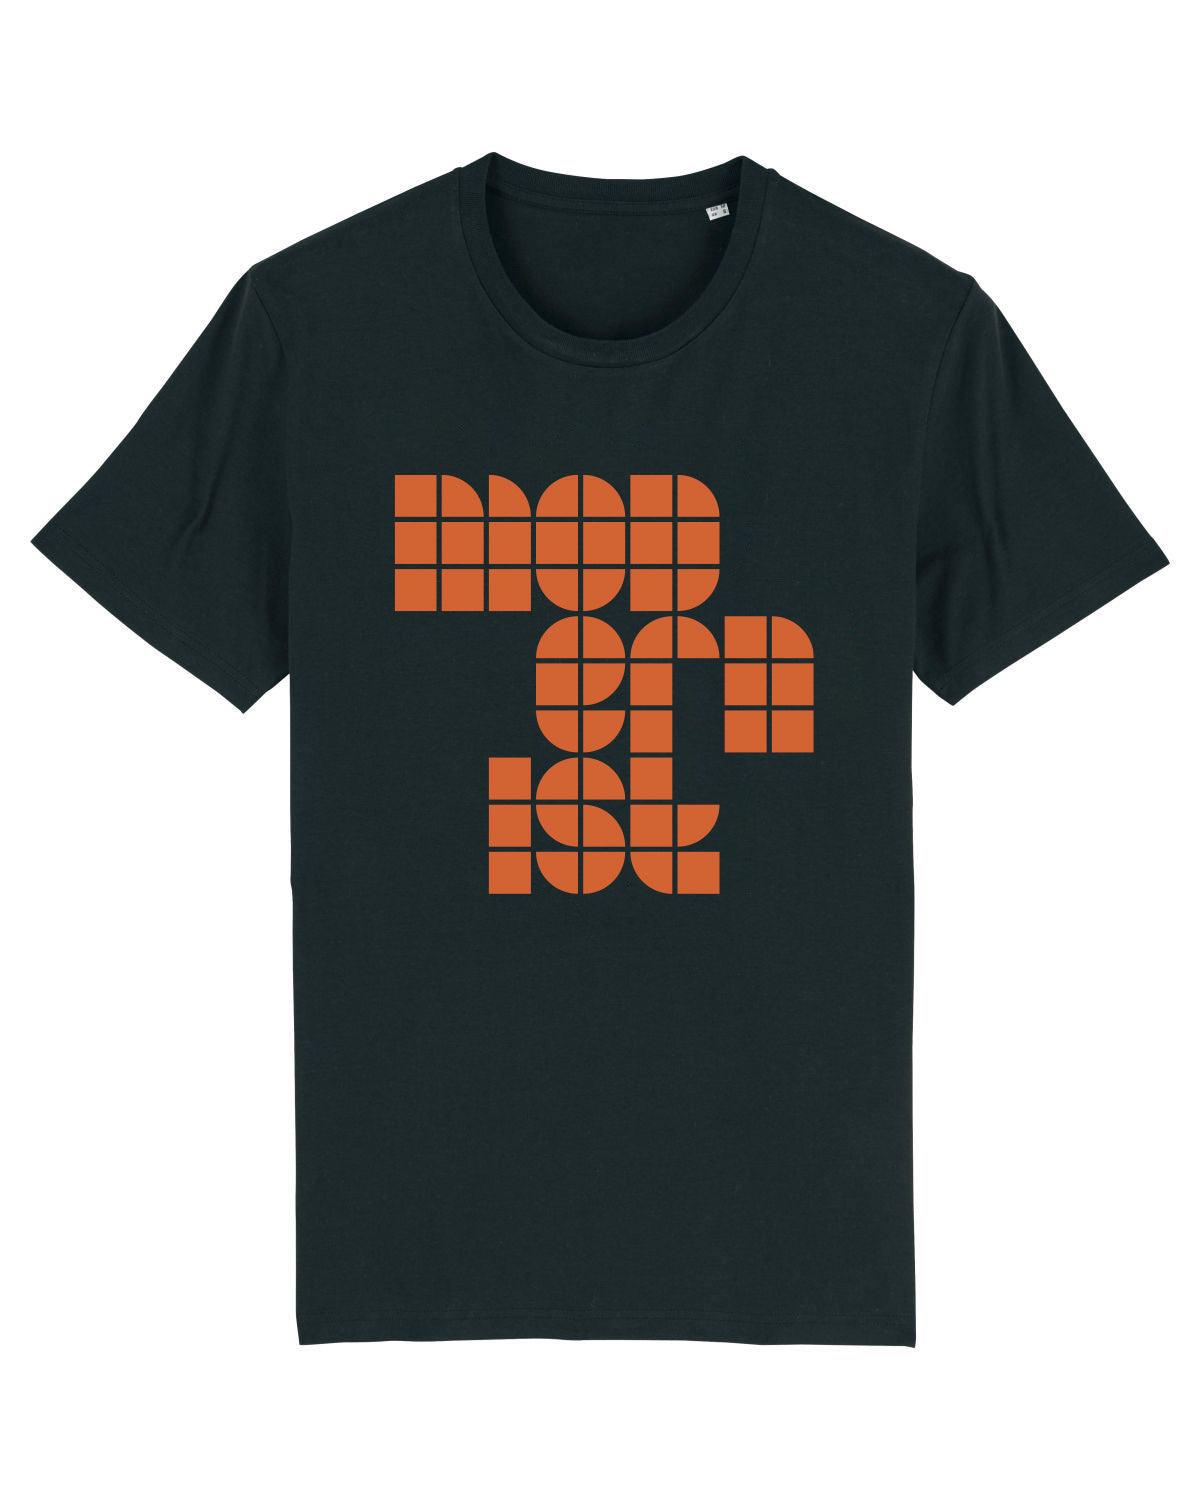 MODERNIST: T-Shirt in Orange Official Merchandise for Detail magazine (2 Colours) - SOUND IS COLOUR